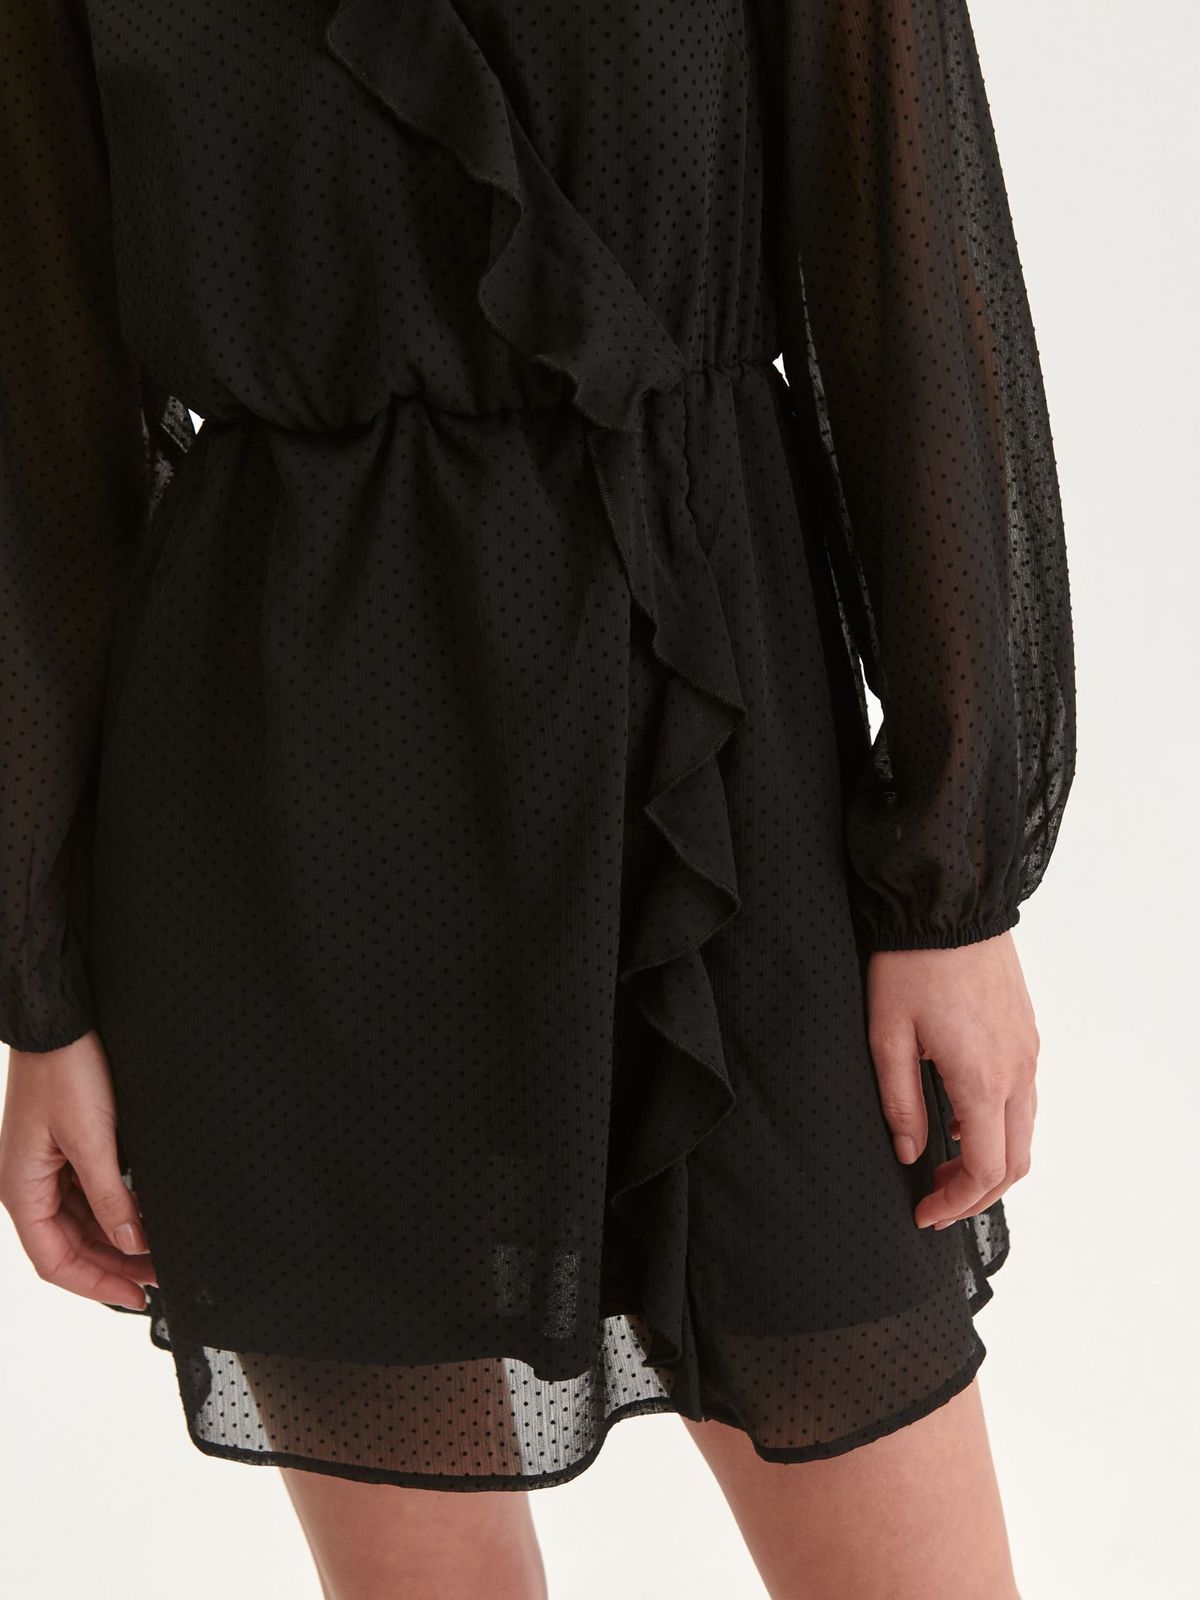 Black dress from veil fabric plumeti short cut cloche with elastic waist with ruffle details 6 - StarShinerS.com